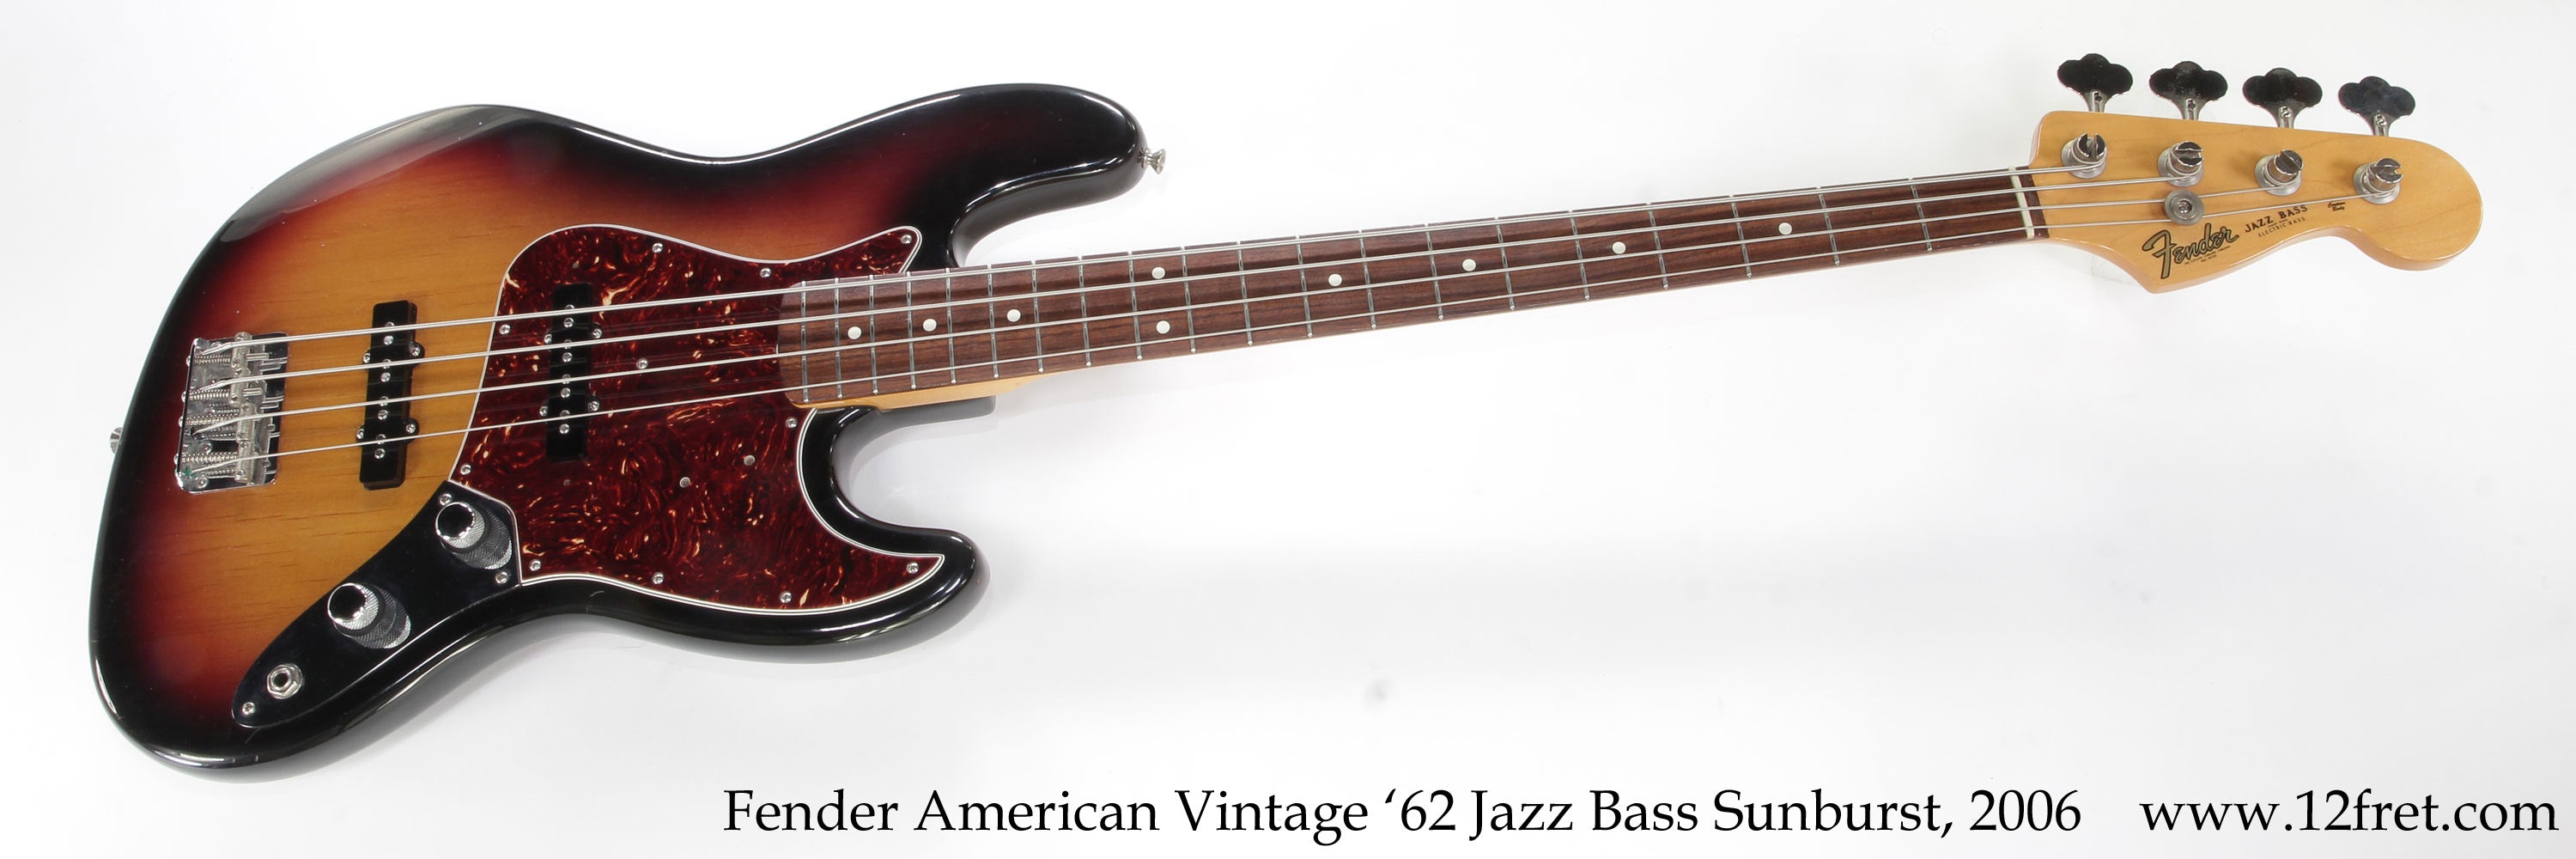 Fender American Vintage '62 Jazz Bass Sunburst, 2006  - The Twelfth Fret